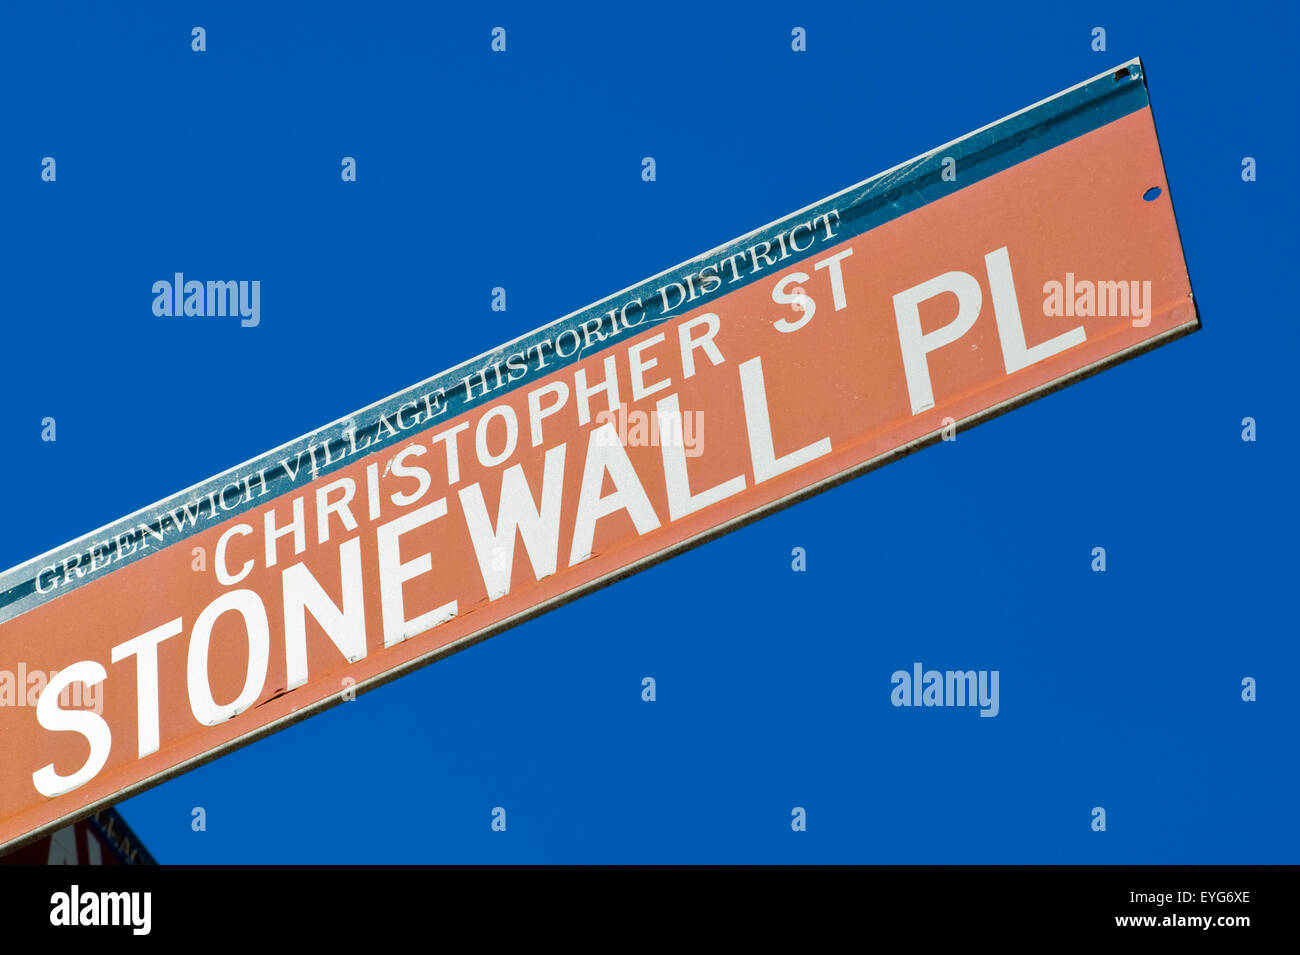 Stonewall Place Stree Sign, West Village, Manhattan, New York, Usa Stock Photo